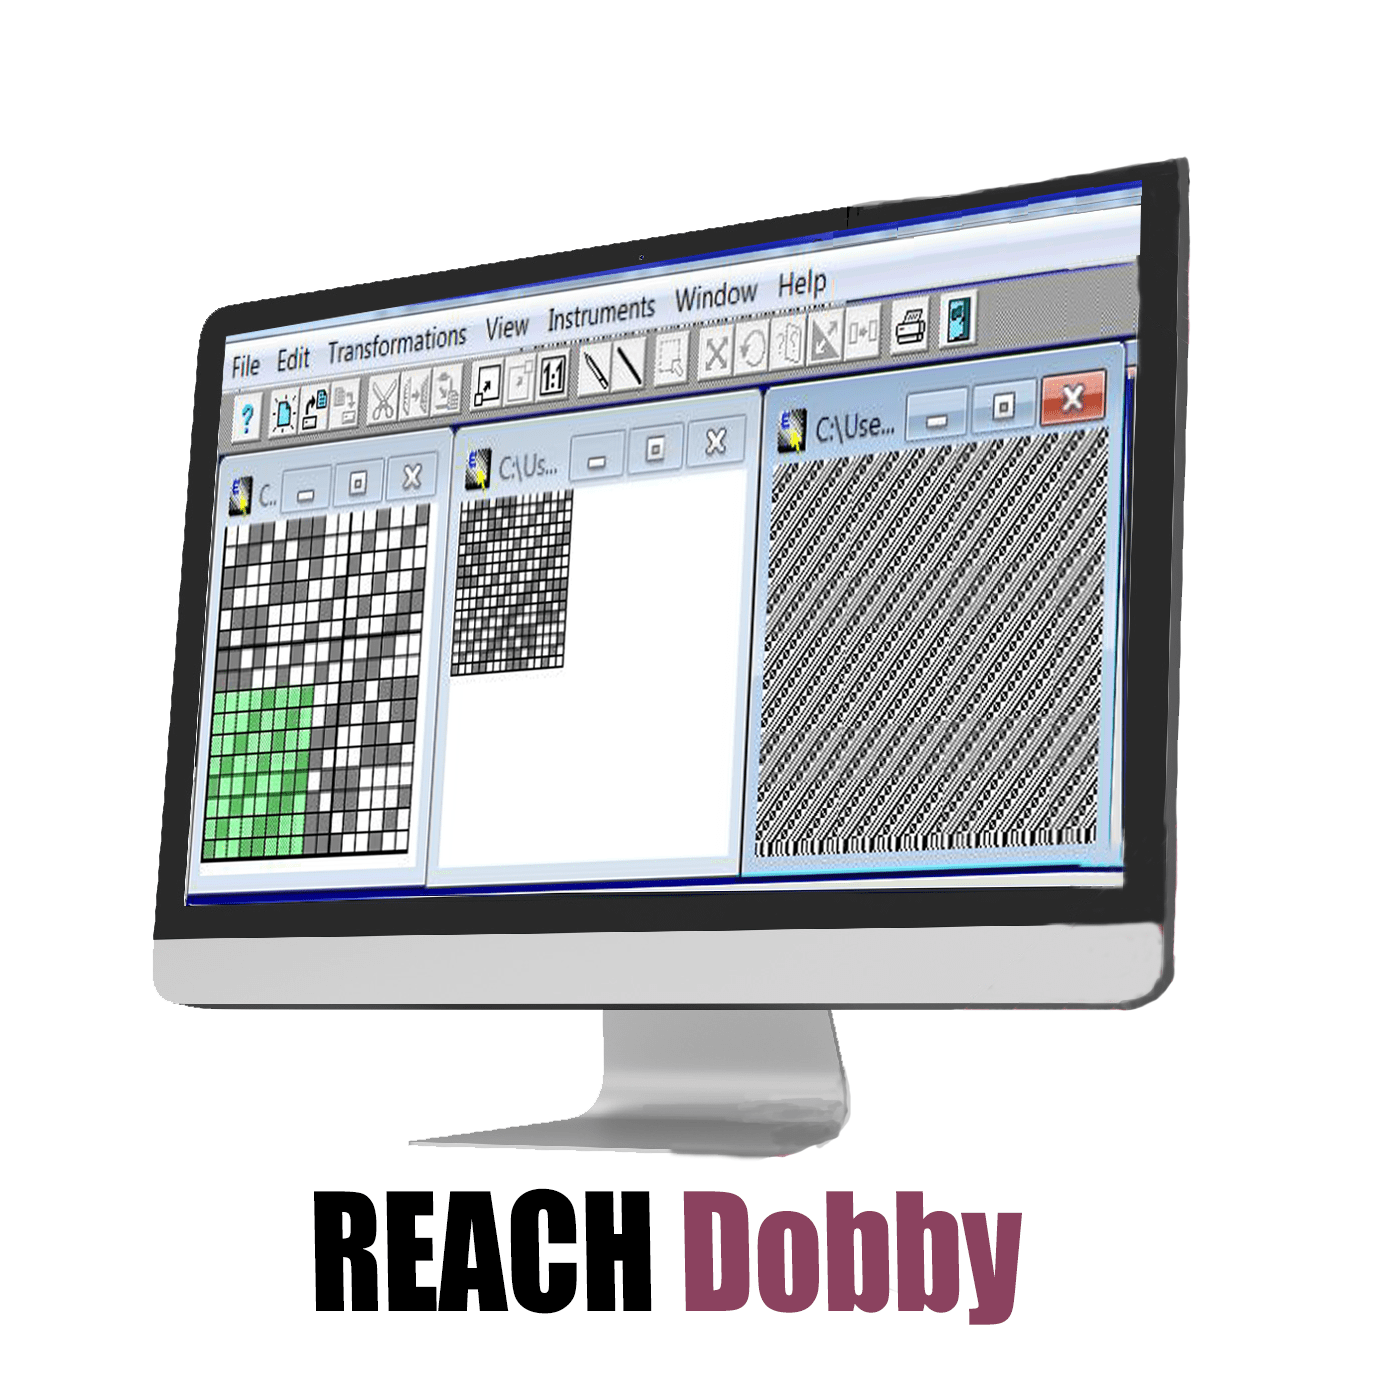 REACH Dobby Image 3